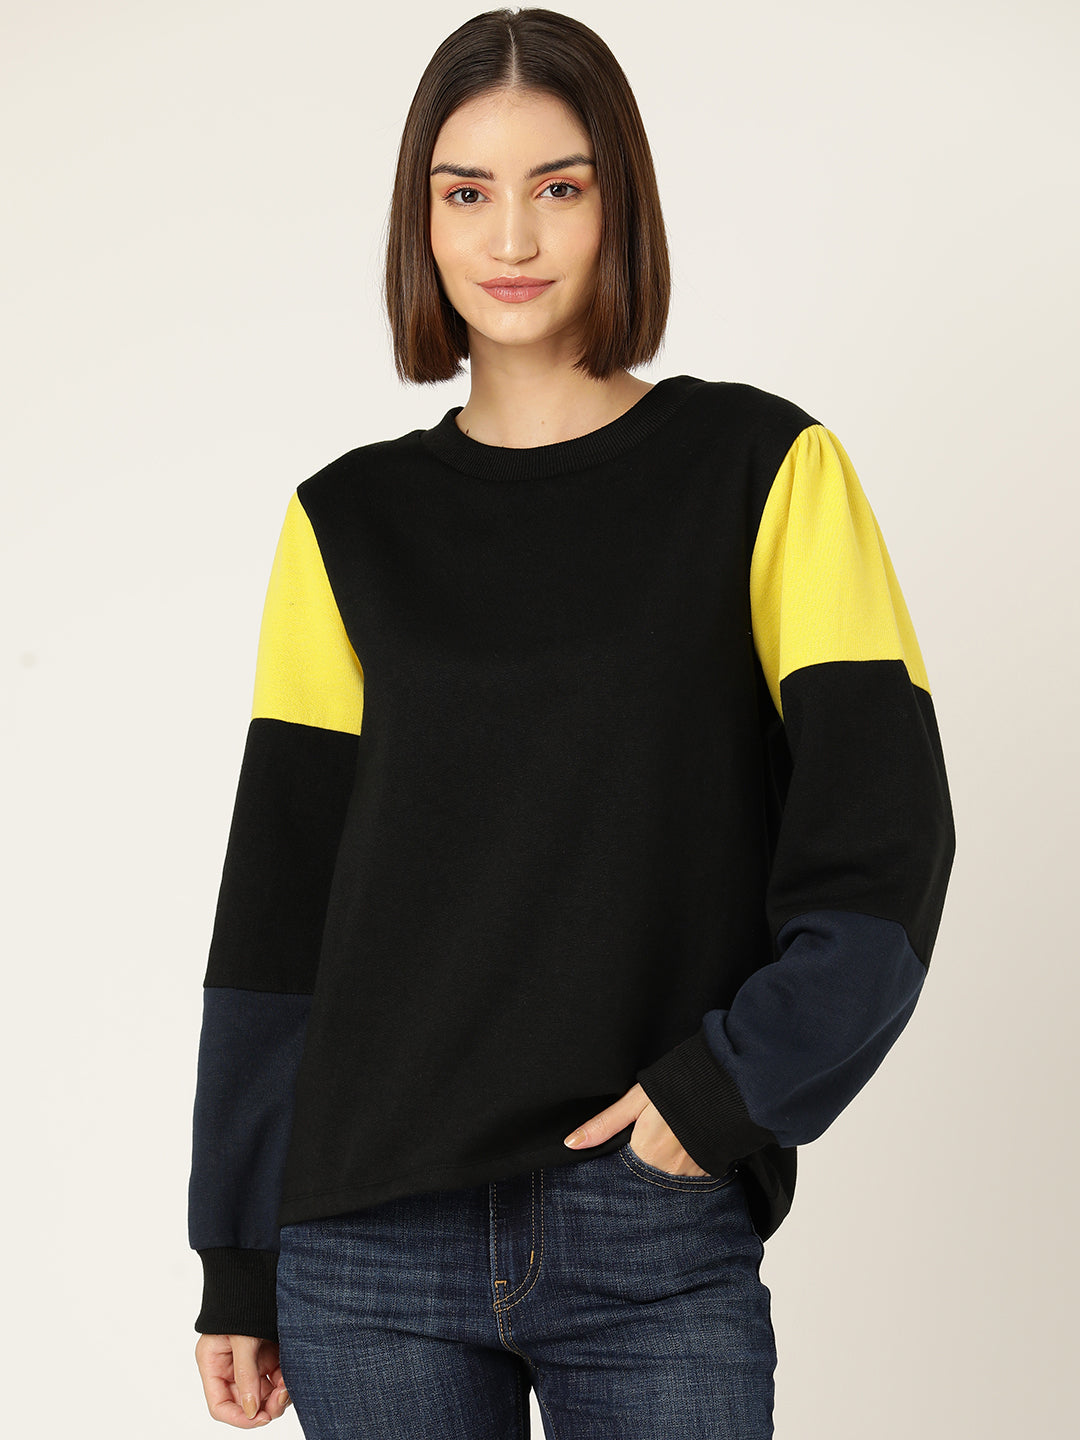 Colour Blocked Fleece Sweatshirt